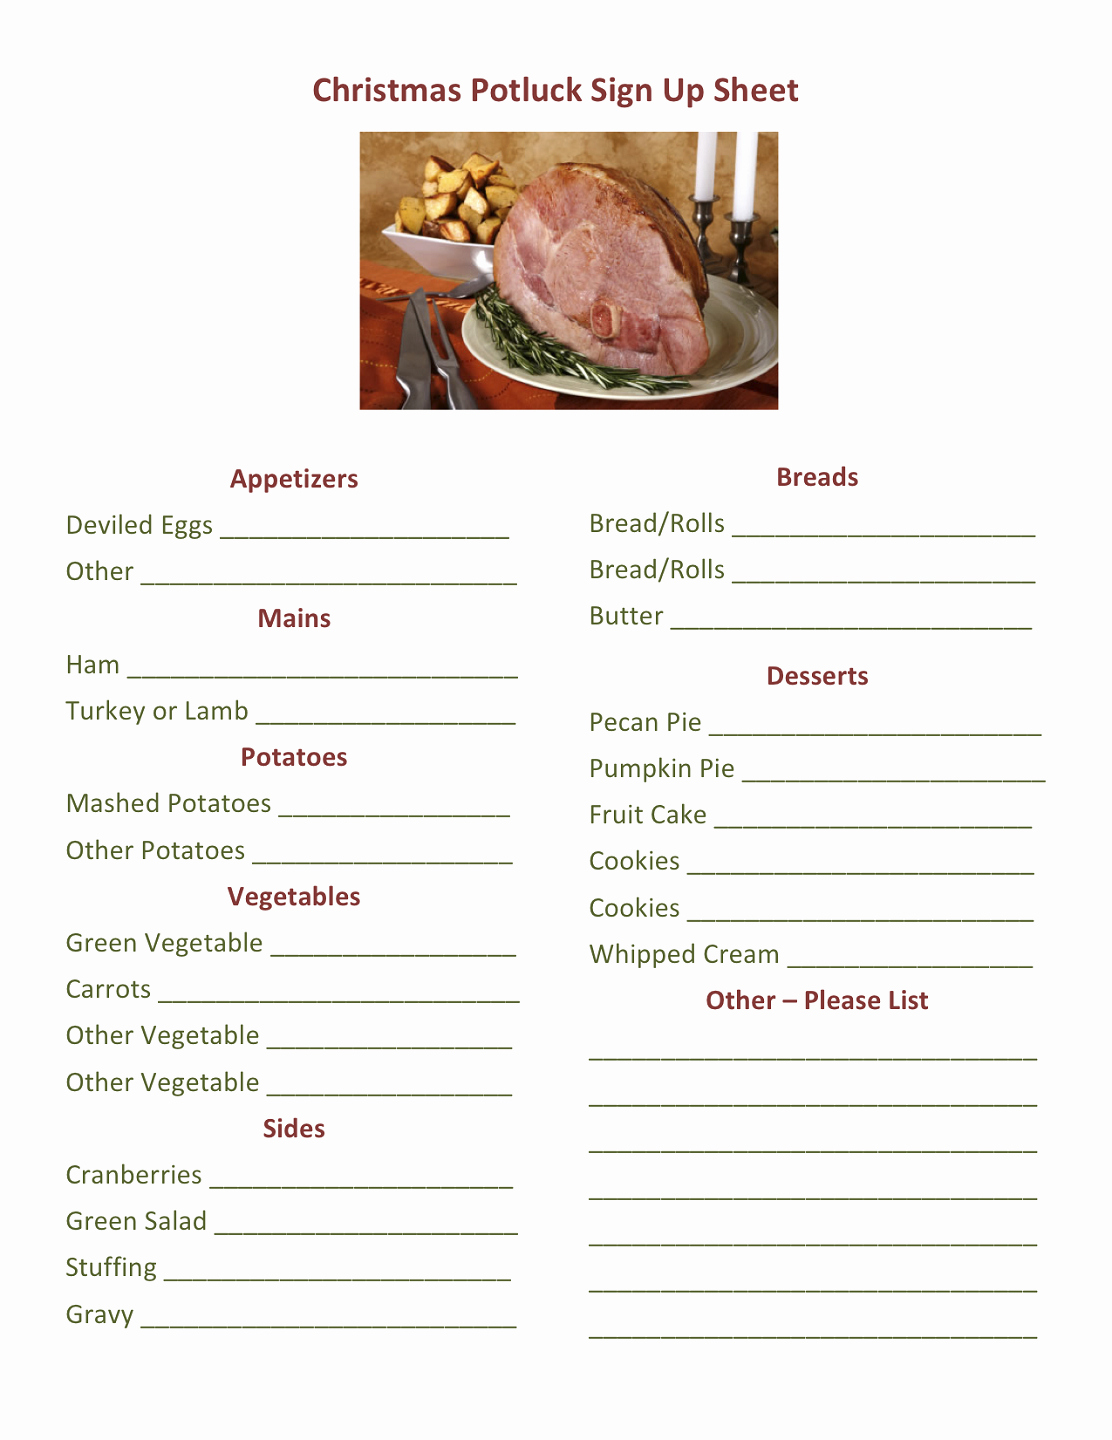 Christmas Potluck Signup Sheet Template Inspirational Potluck Dinner Sign Up Sheet Printable